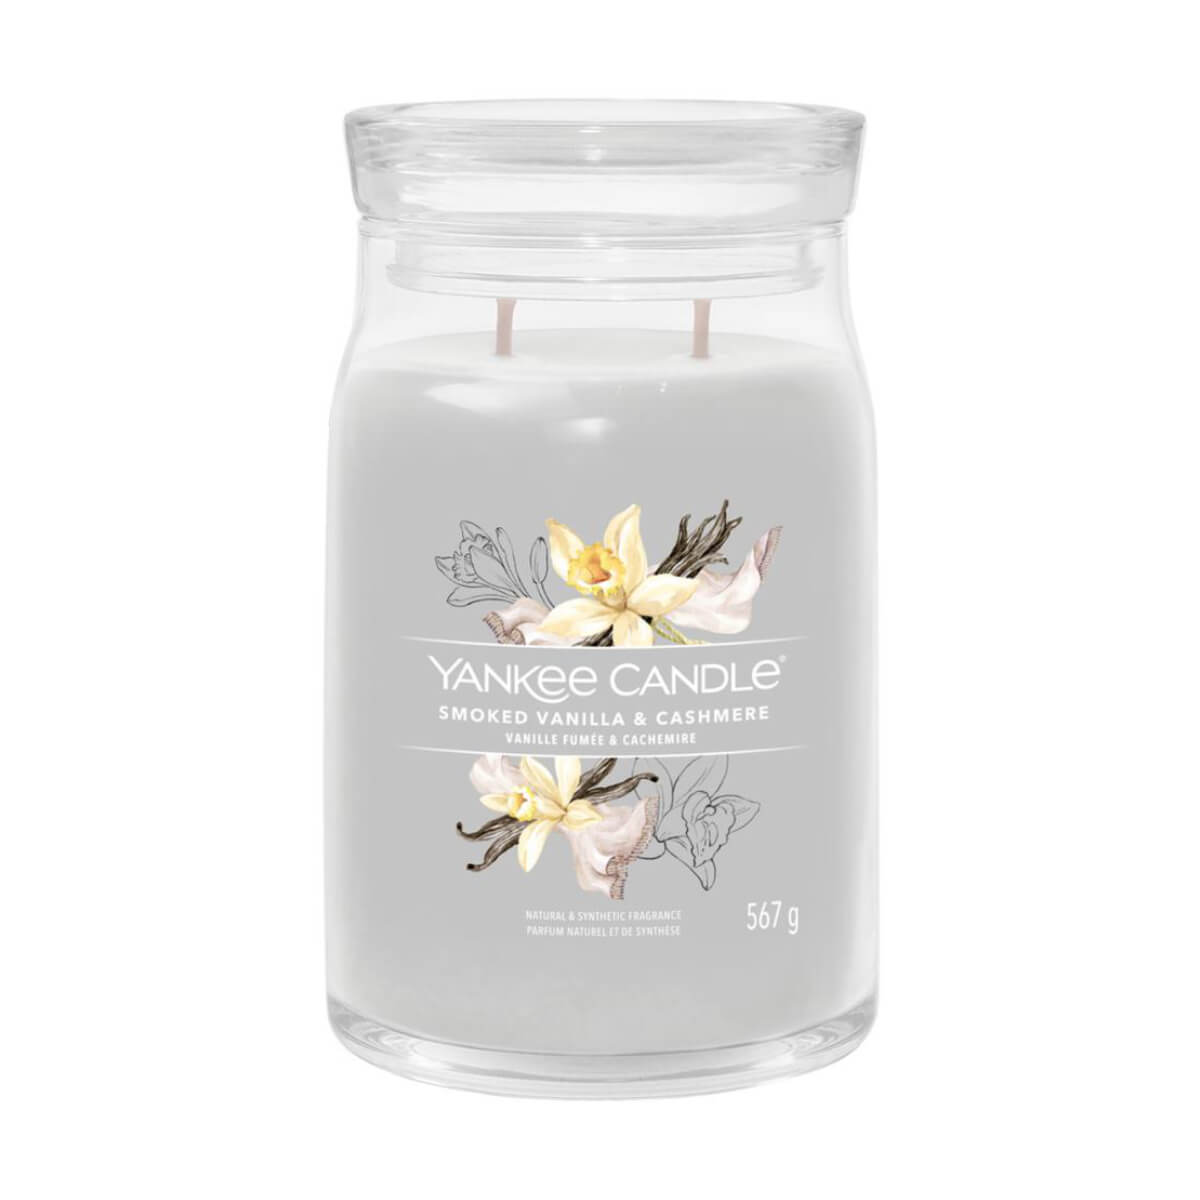 Vela Vaso 5 Mechas Wild Orchid Yankee Candle – Magia do Lar